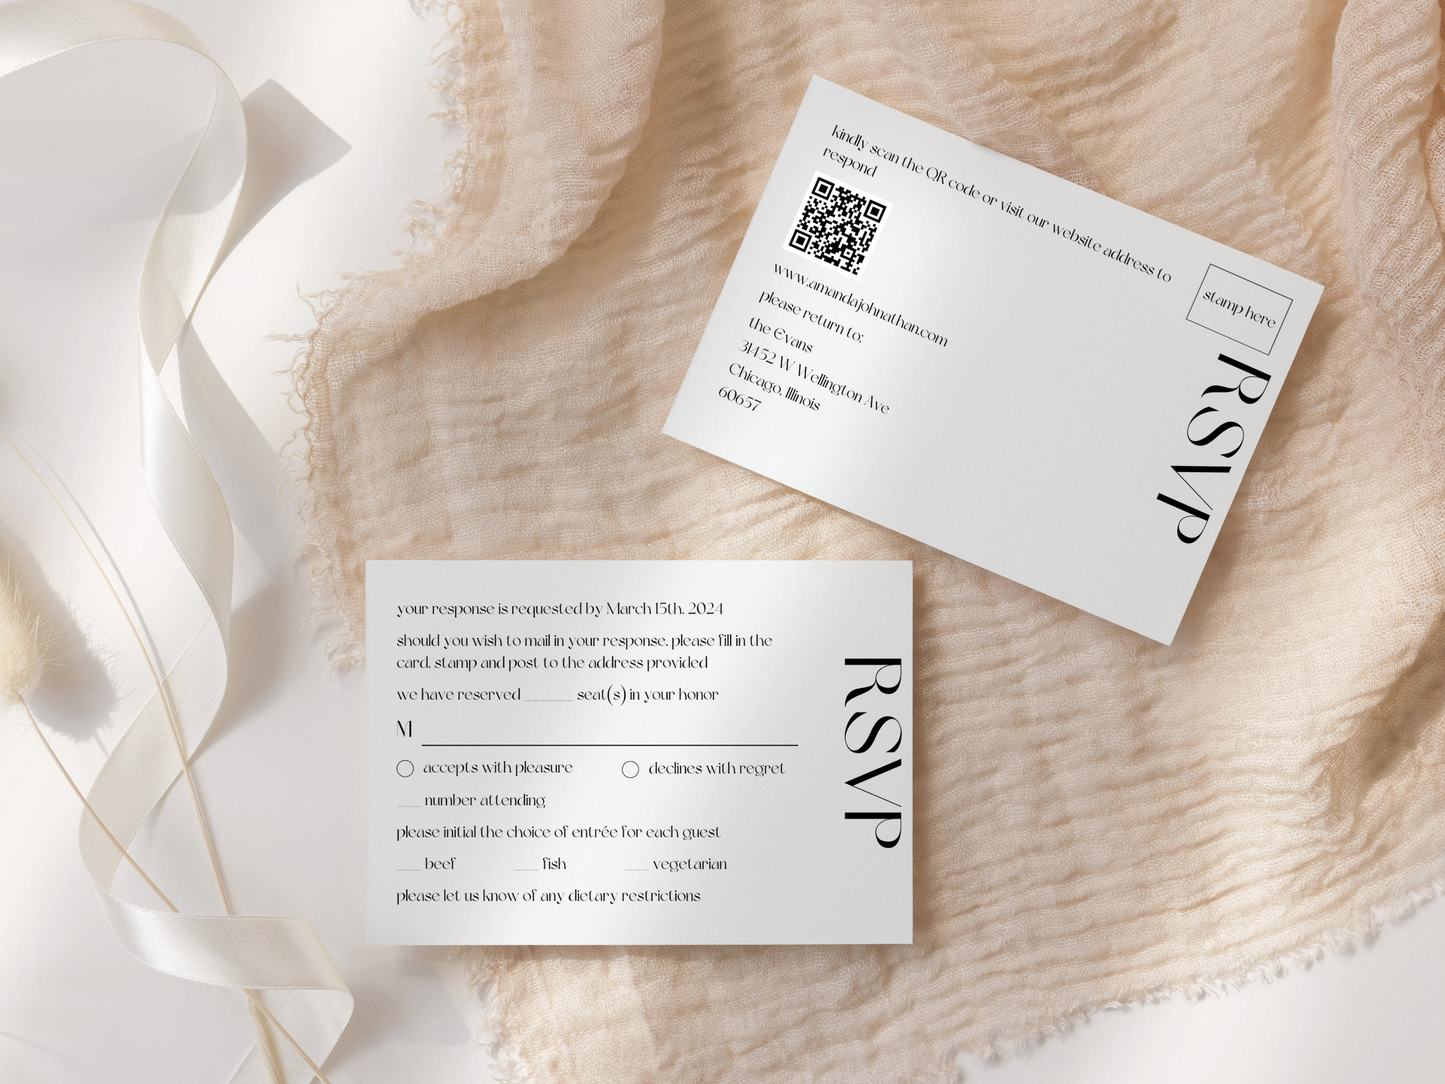 Modern Minimalist Photo Wedding Invitation & Insert Cards Template Bundle, Printable Templates